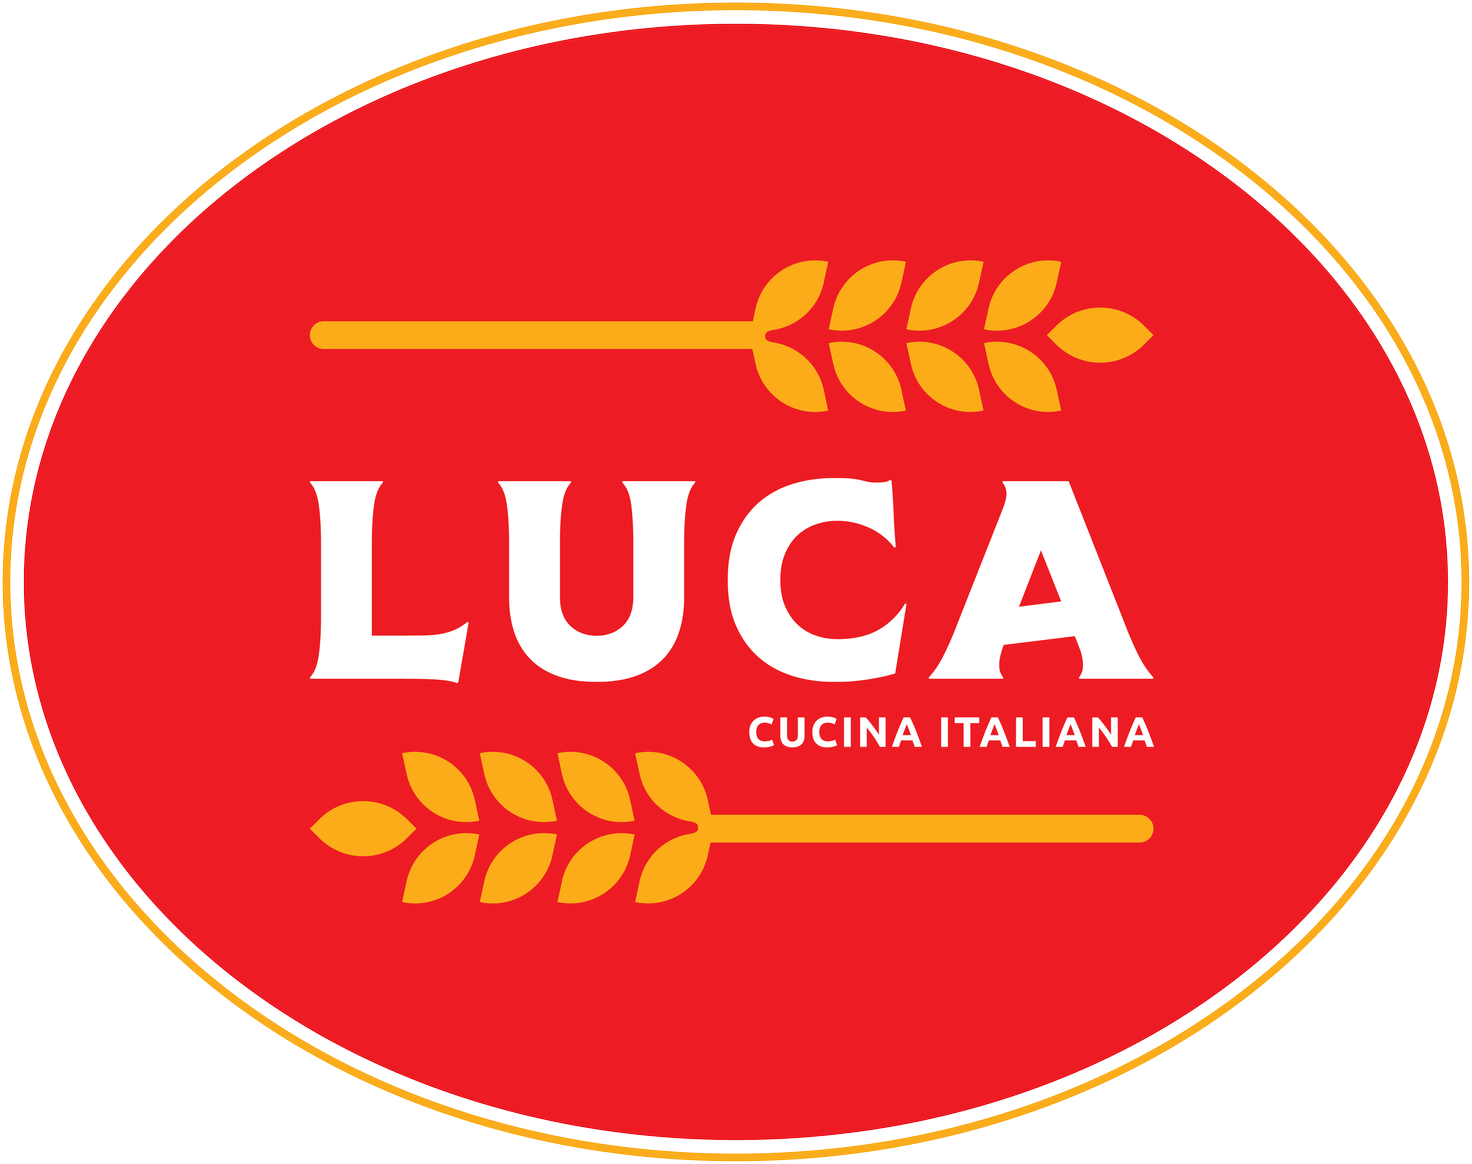 Luca Cucina Italiana